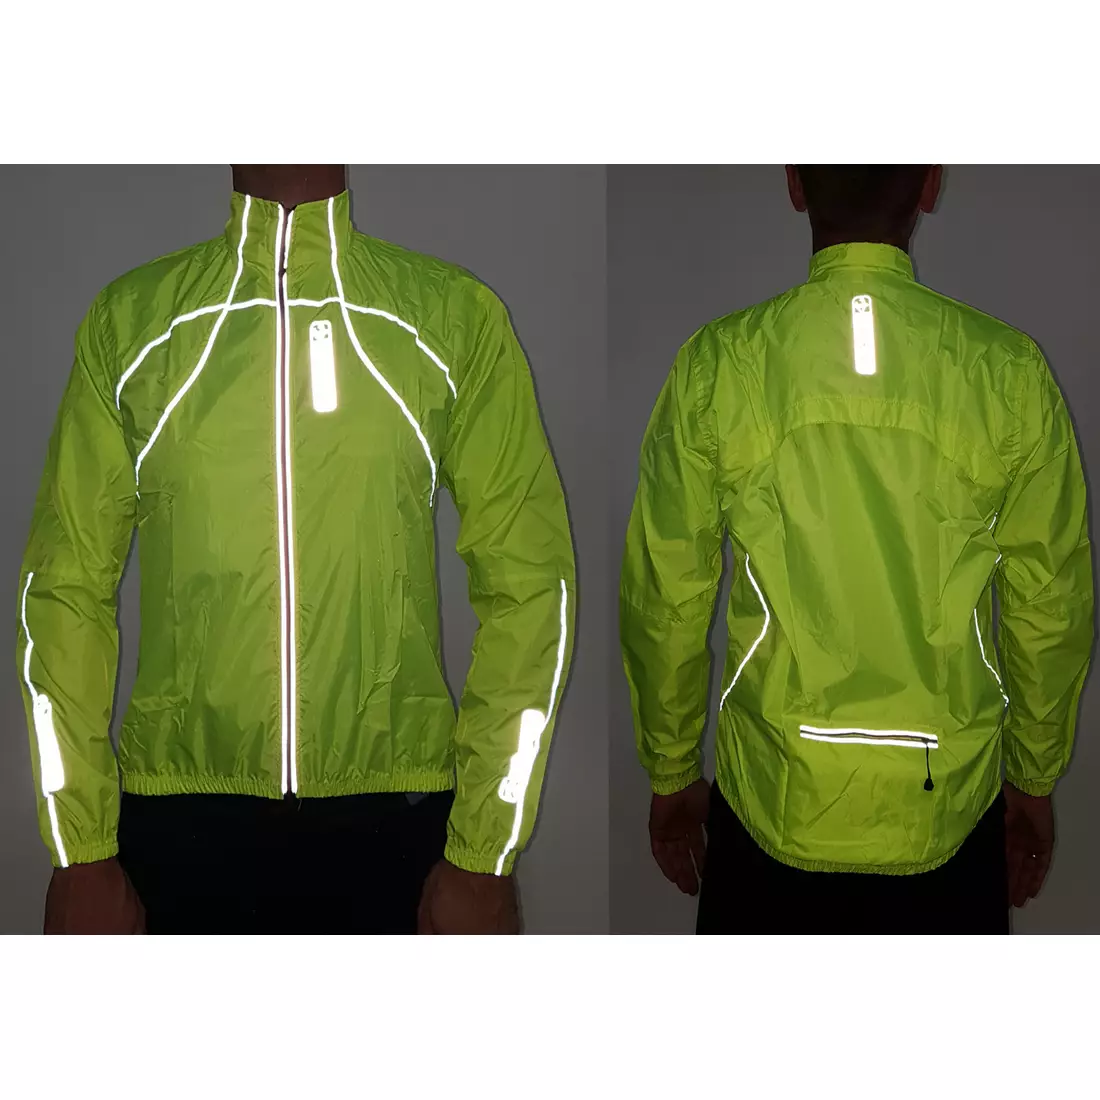 DEKO J1 rain jacket for bicycles blue